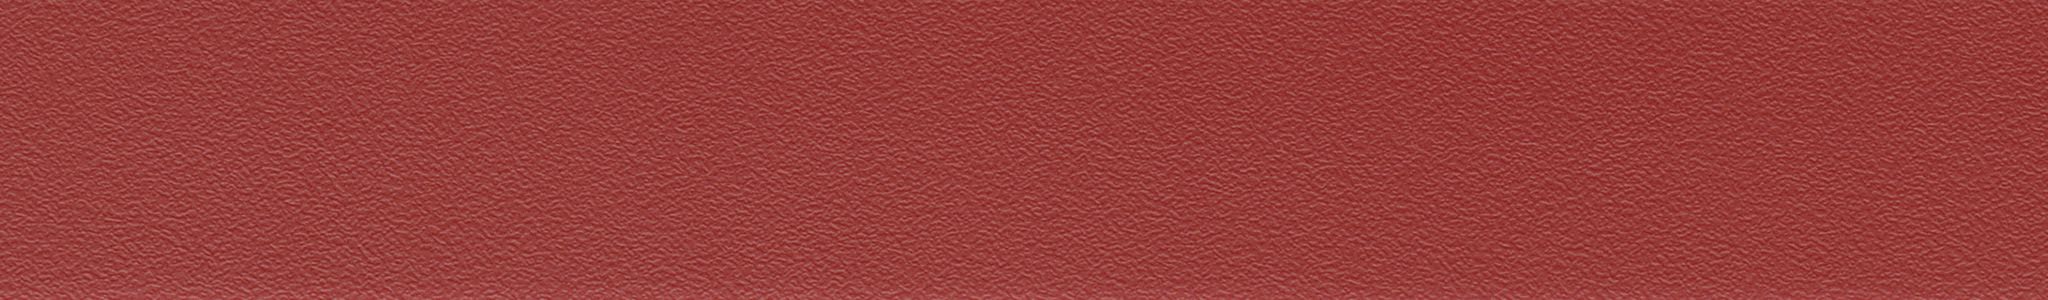 ABS U 311 červená burgundy perlička 22x2mm HU 13311